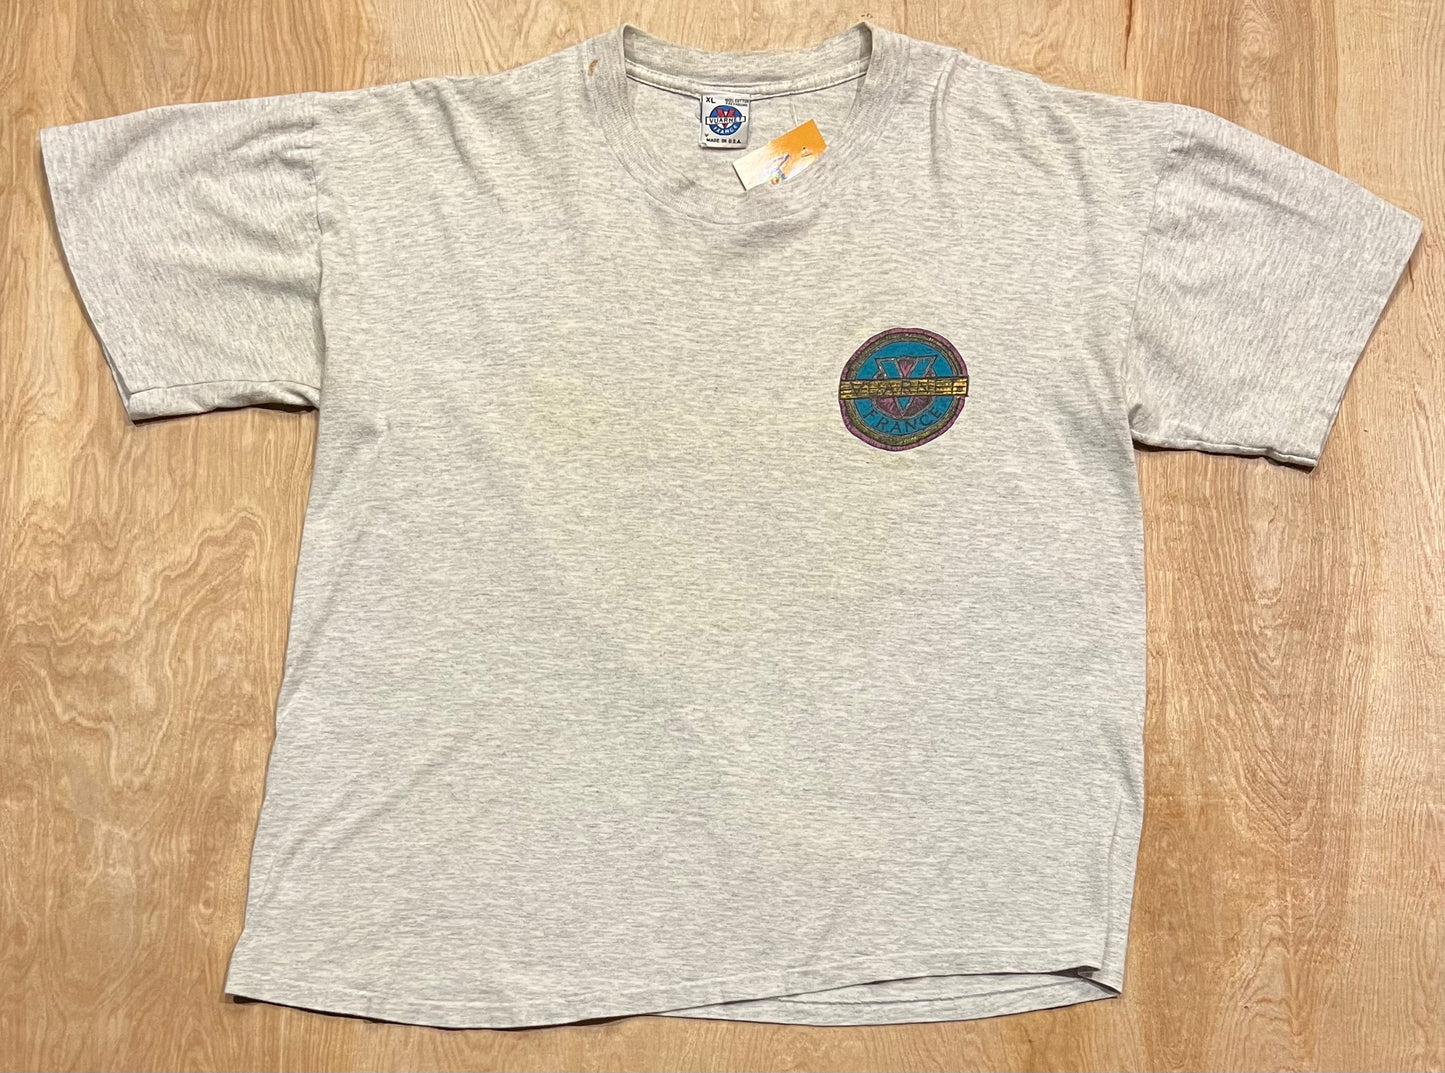 1991 Vuarnet France Single Stitch T-Shirt